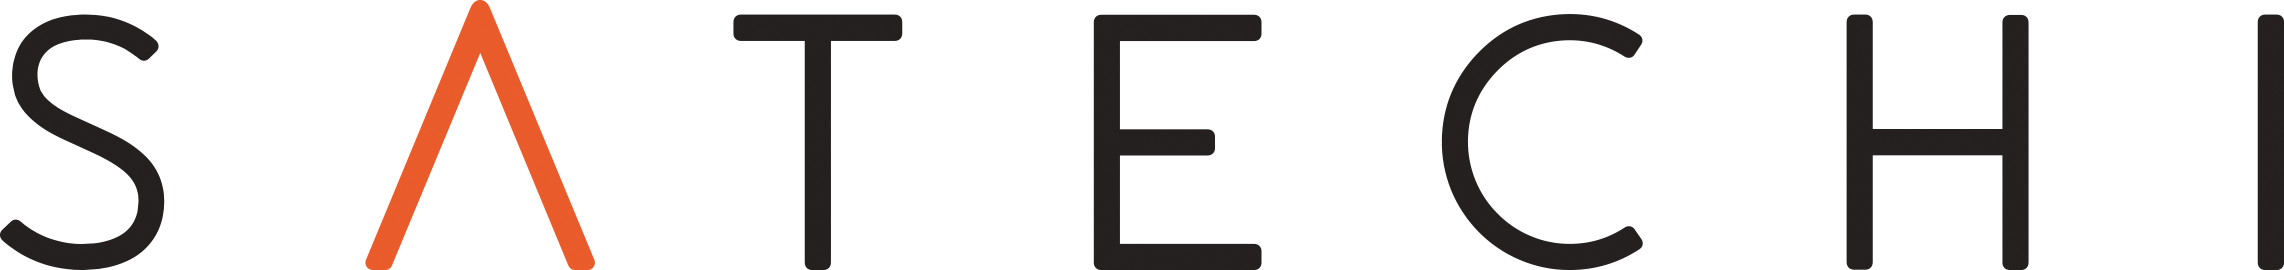 Satechi Logo 2